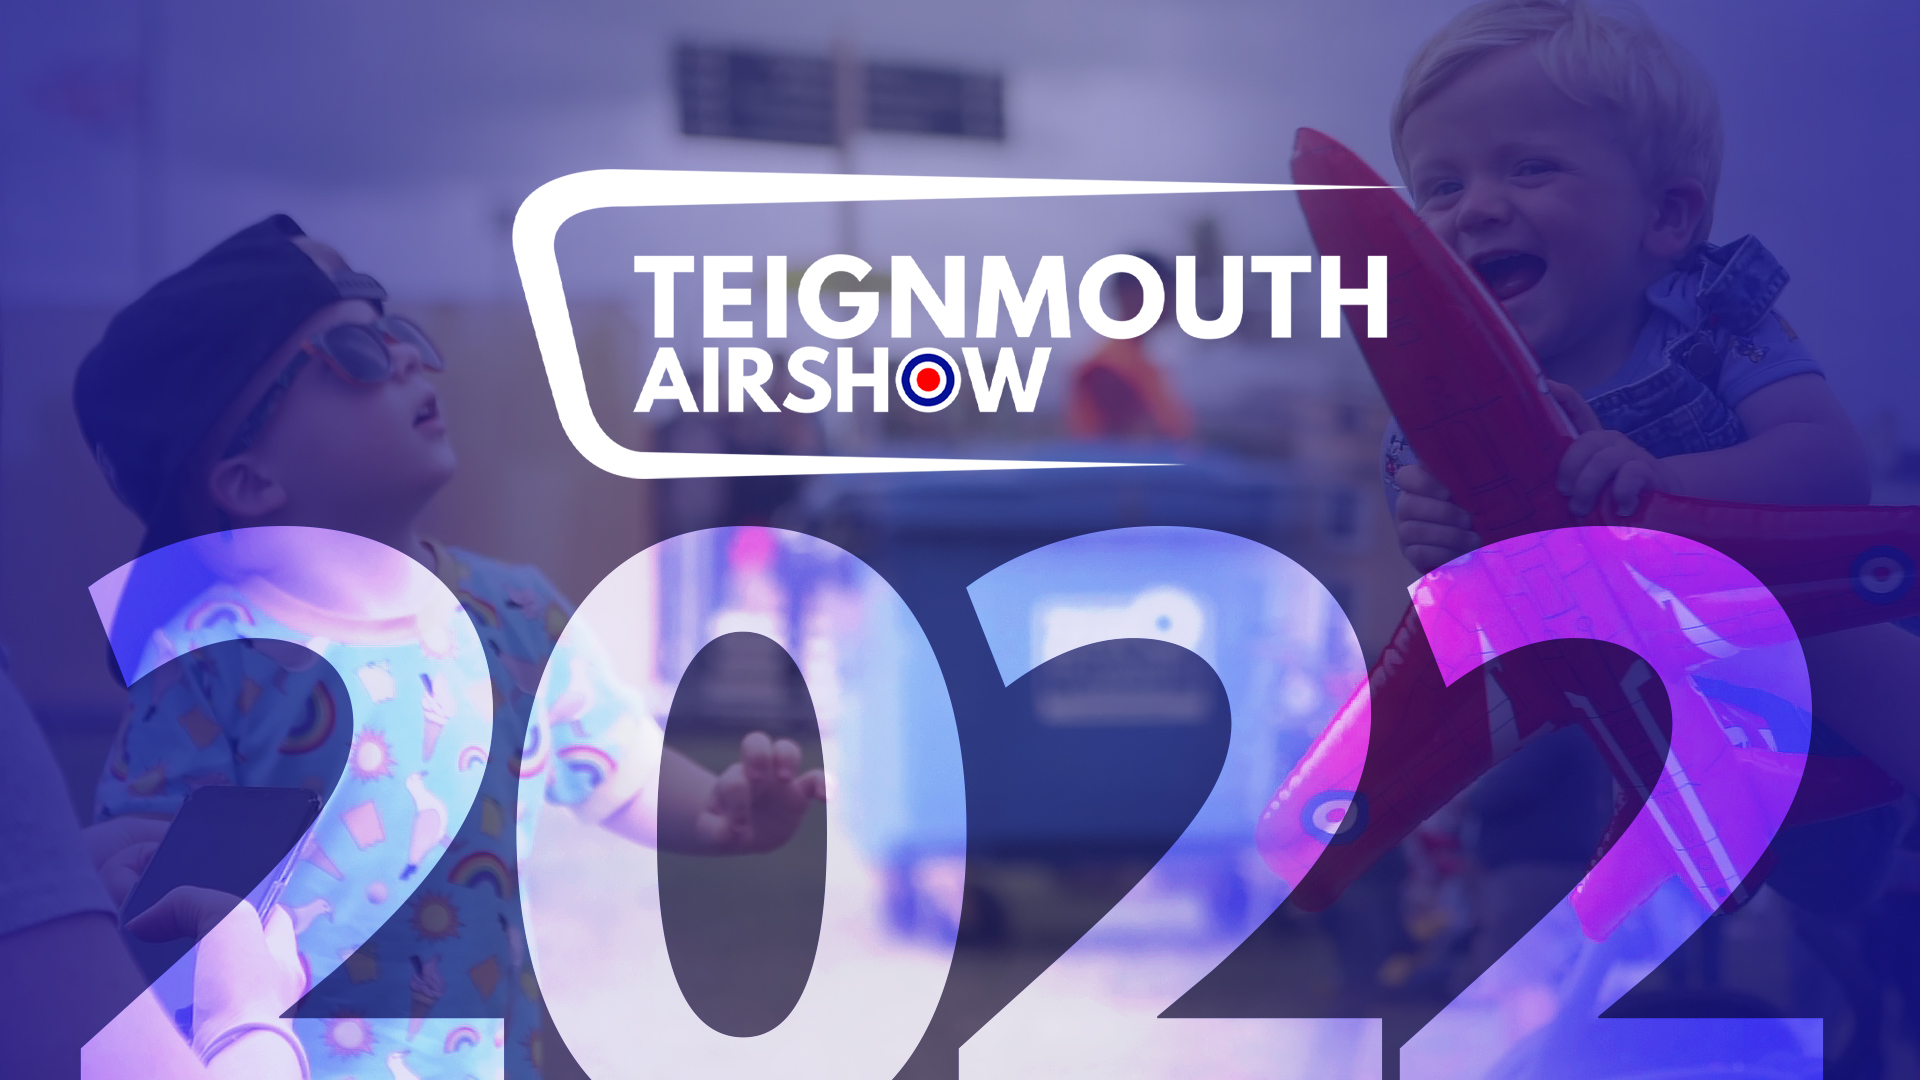 Teignmouth Airshow 2022